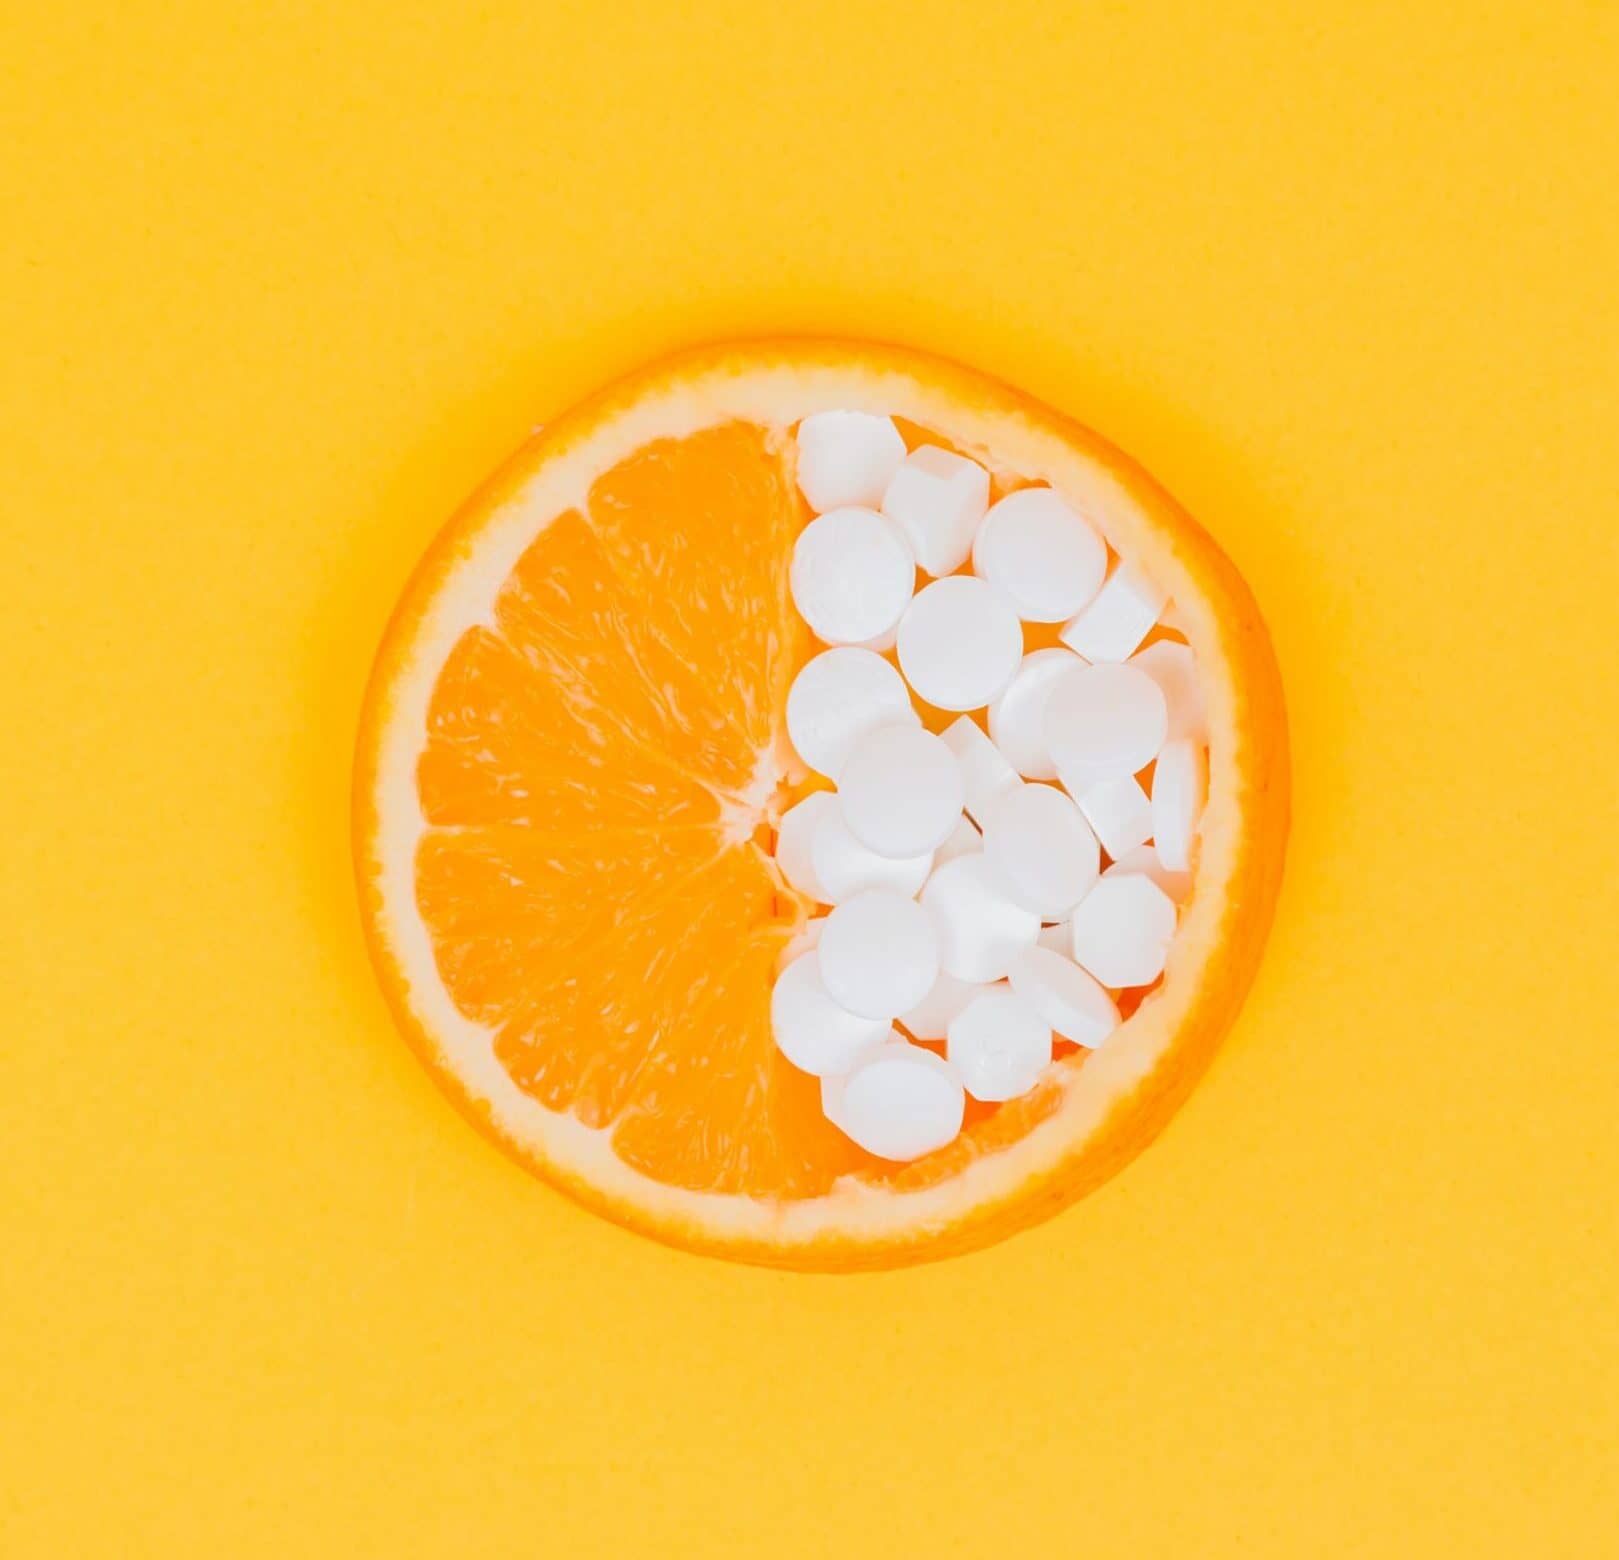 Does Vitamin C for Eczema Help? 5 Amazing Benefits